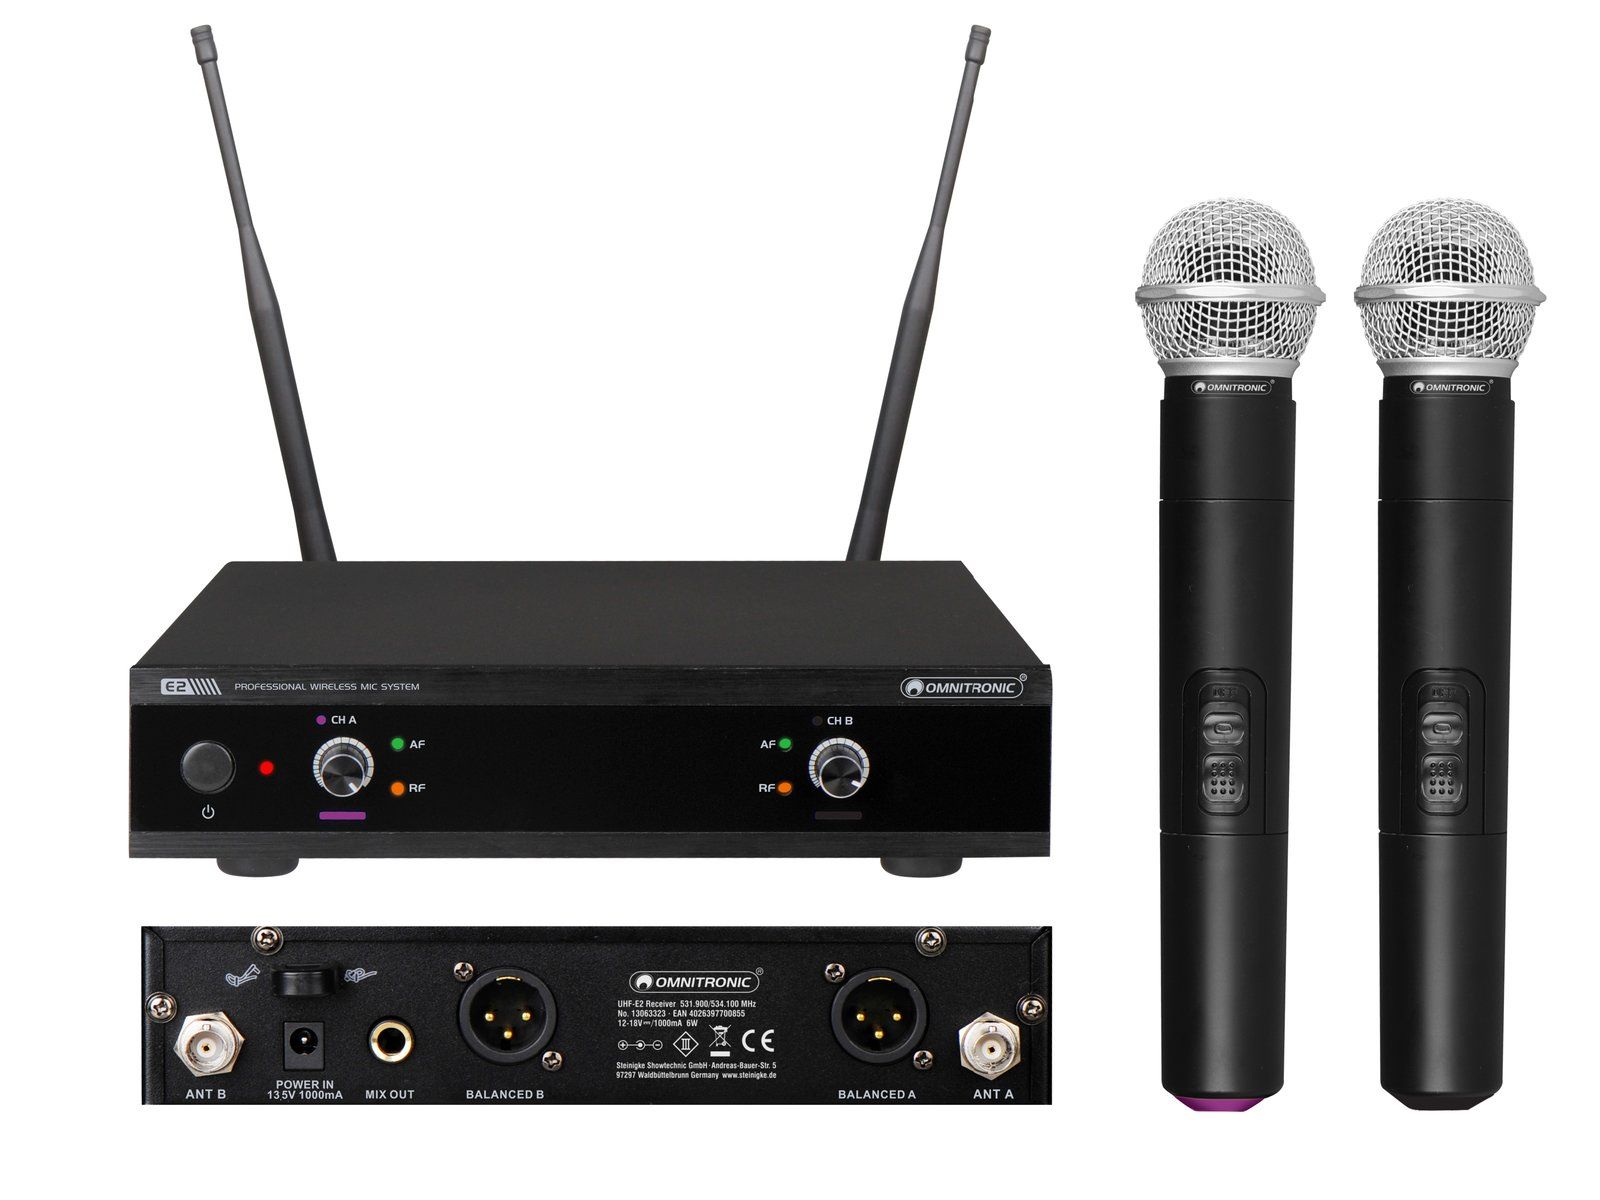 LEKATO Wireless Microphone System Transmitter Receiver 5.8GHz Plug On XLR  100FT